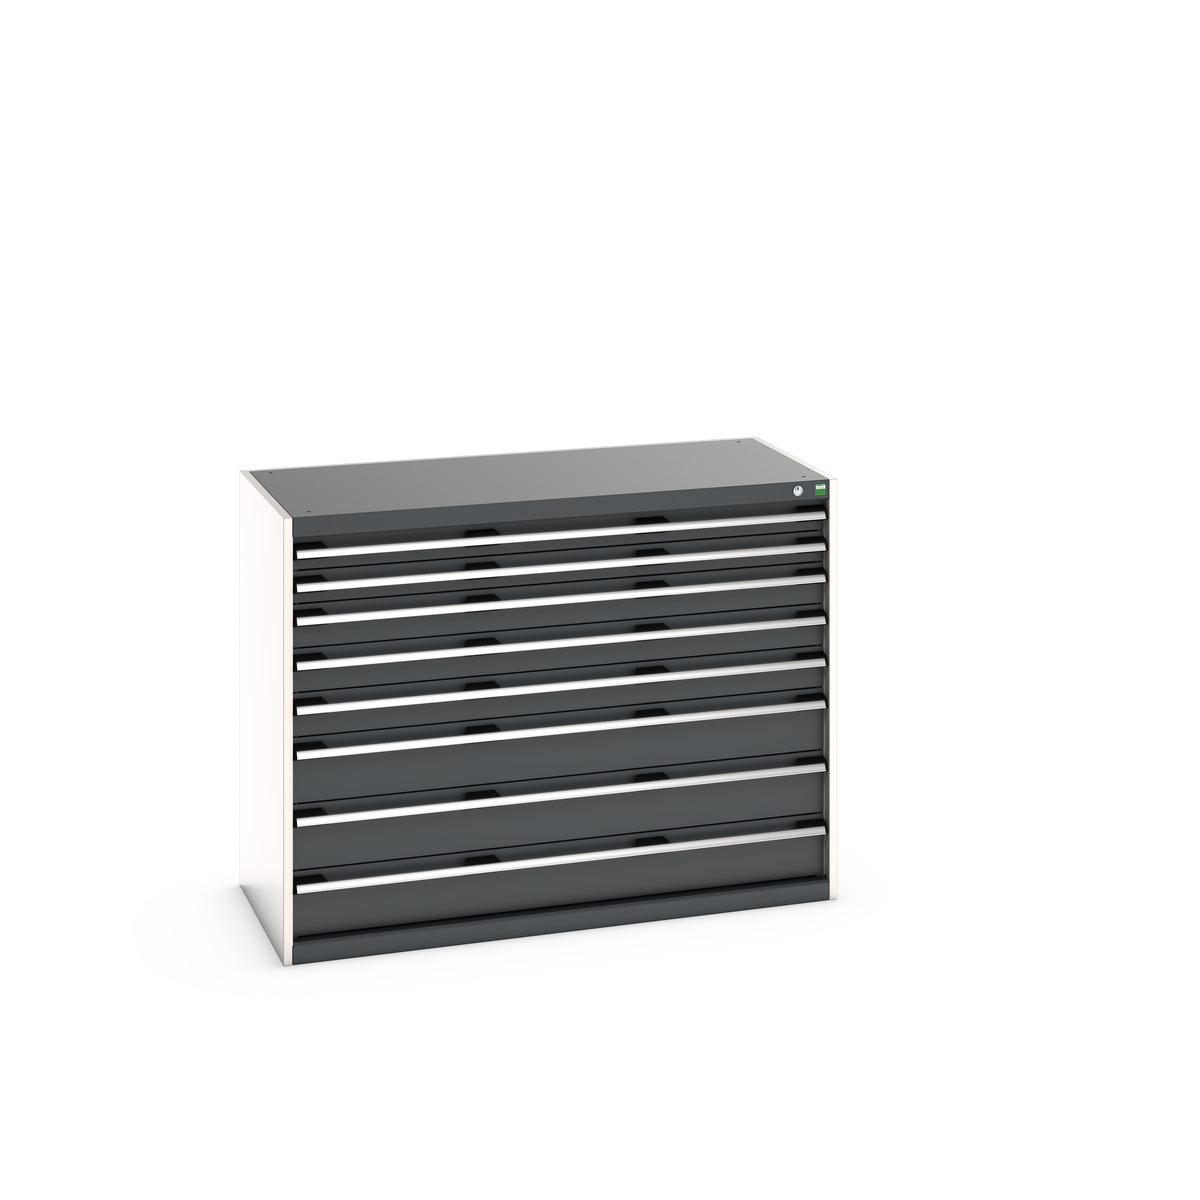 40022154. - cubio drawer cabinet